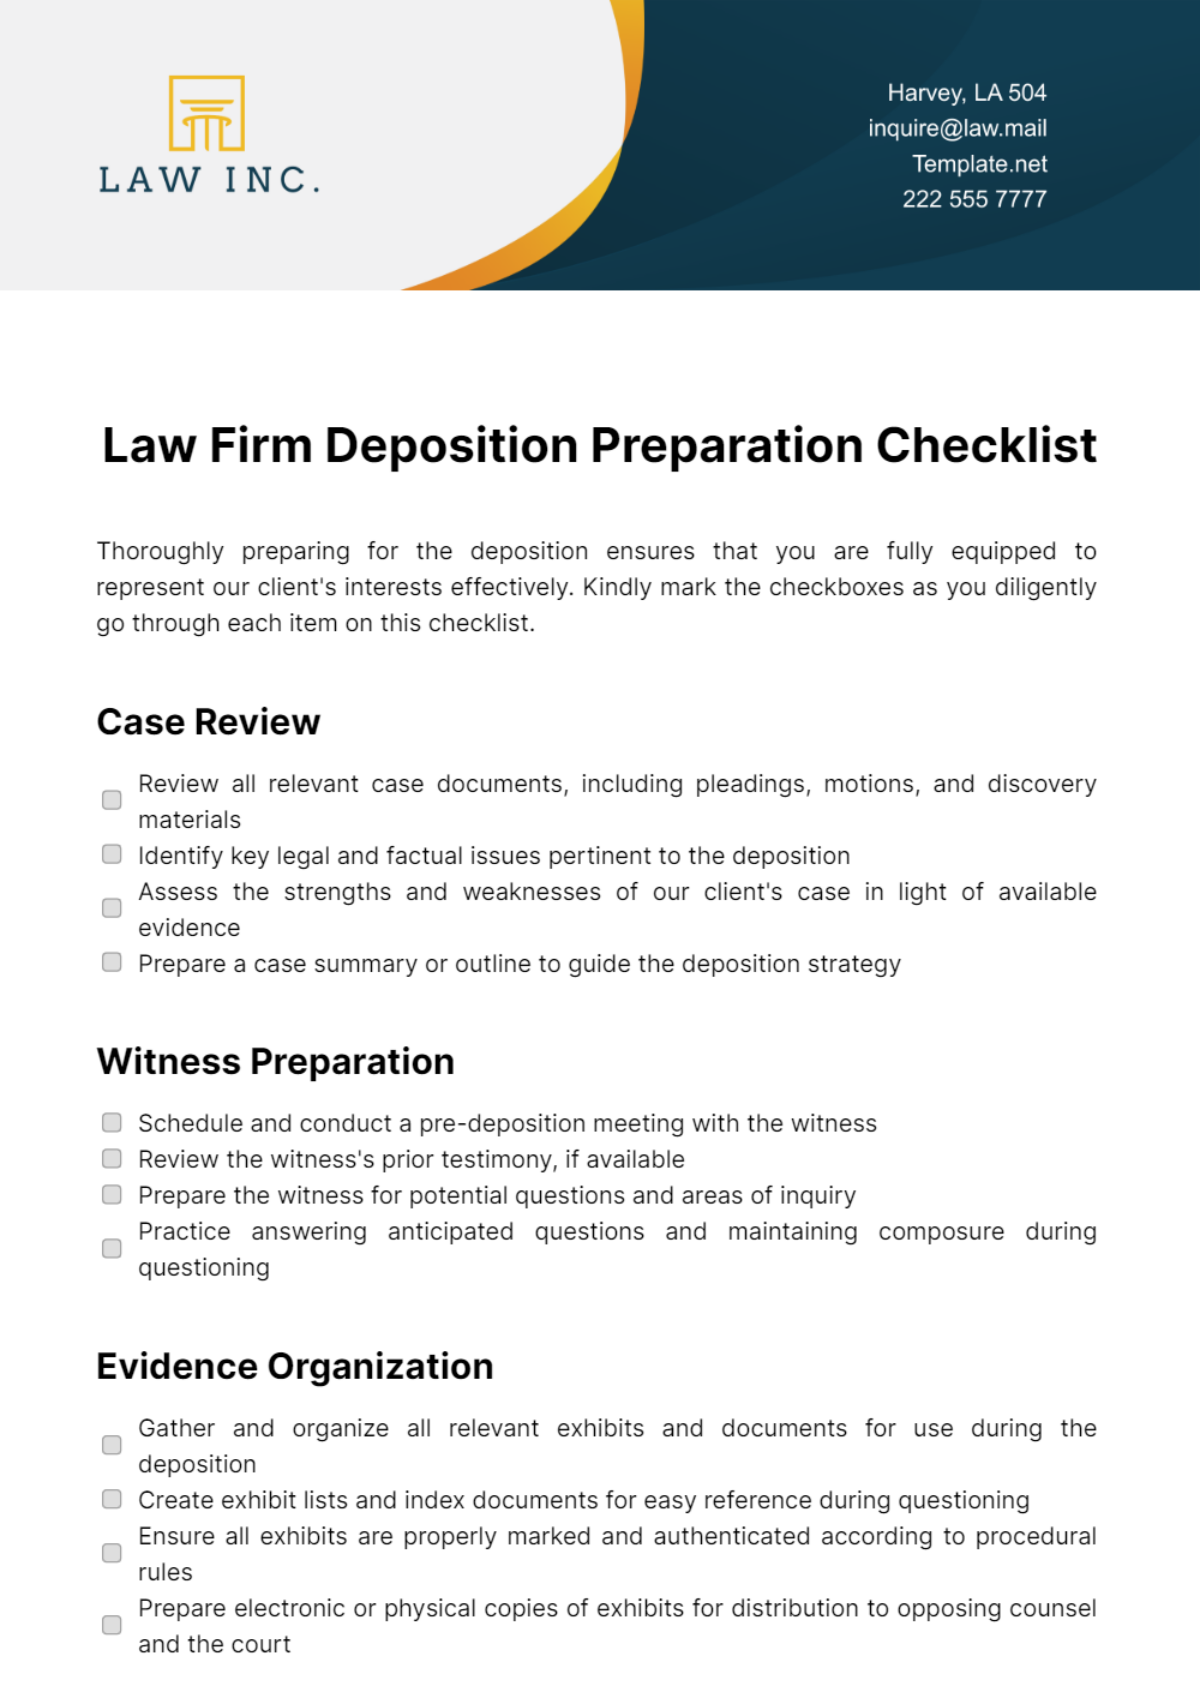 Law Firm Deposition Preparation Checklist Template